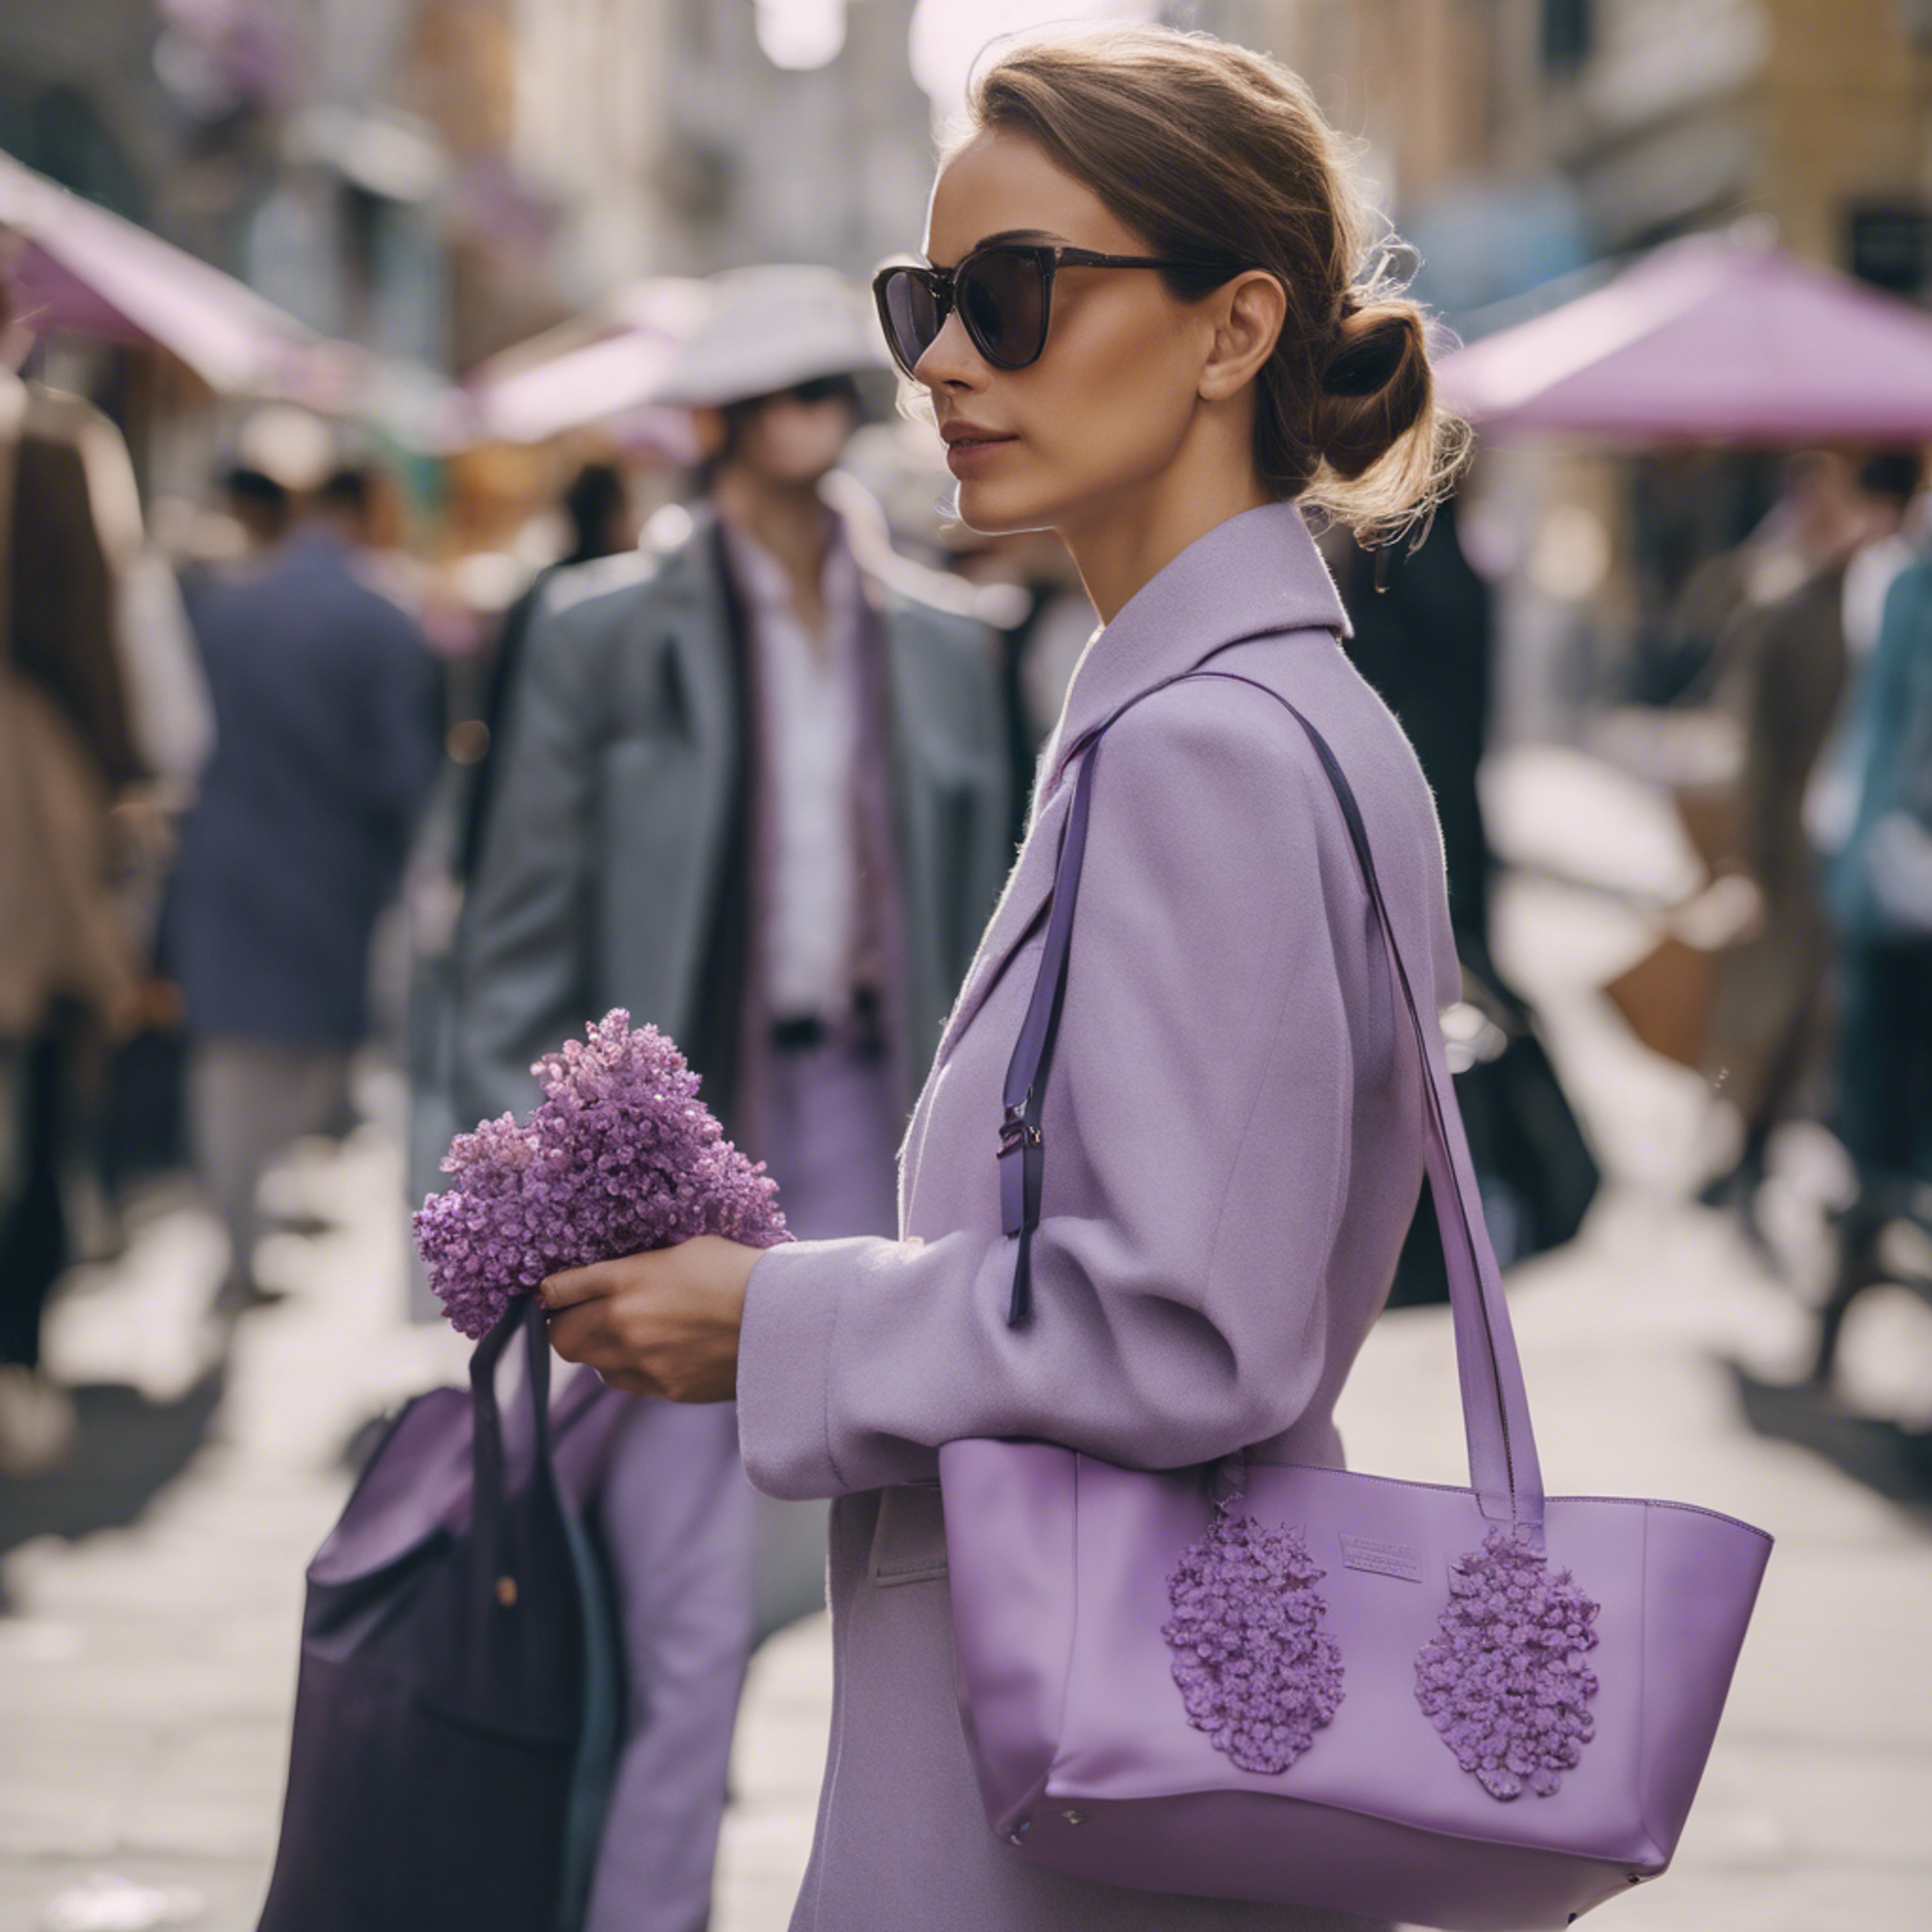 An elegant lady carrying a preppy lilac tote bag while walking along a crowded city street. Tapéta[fda66da185c34bc685d3]